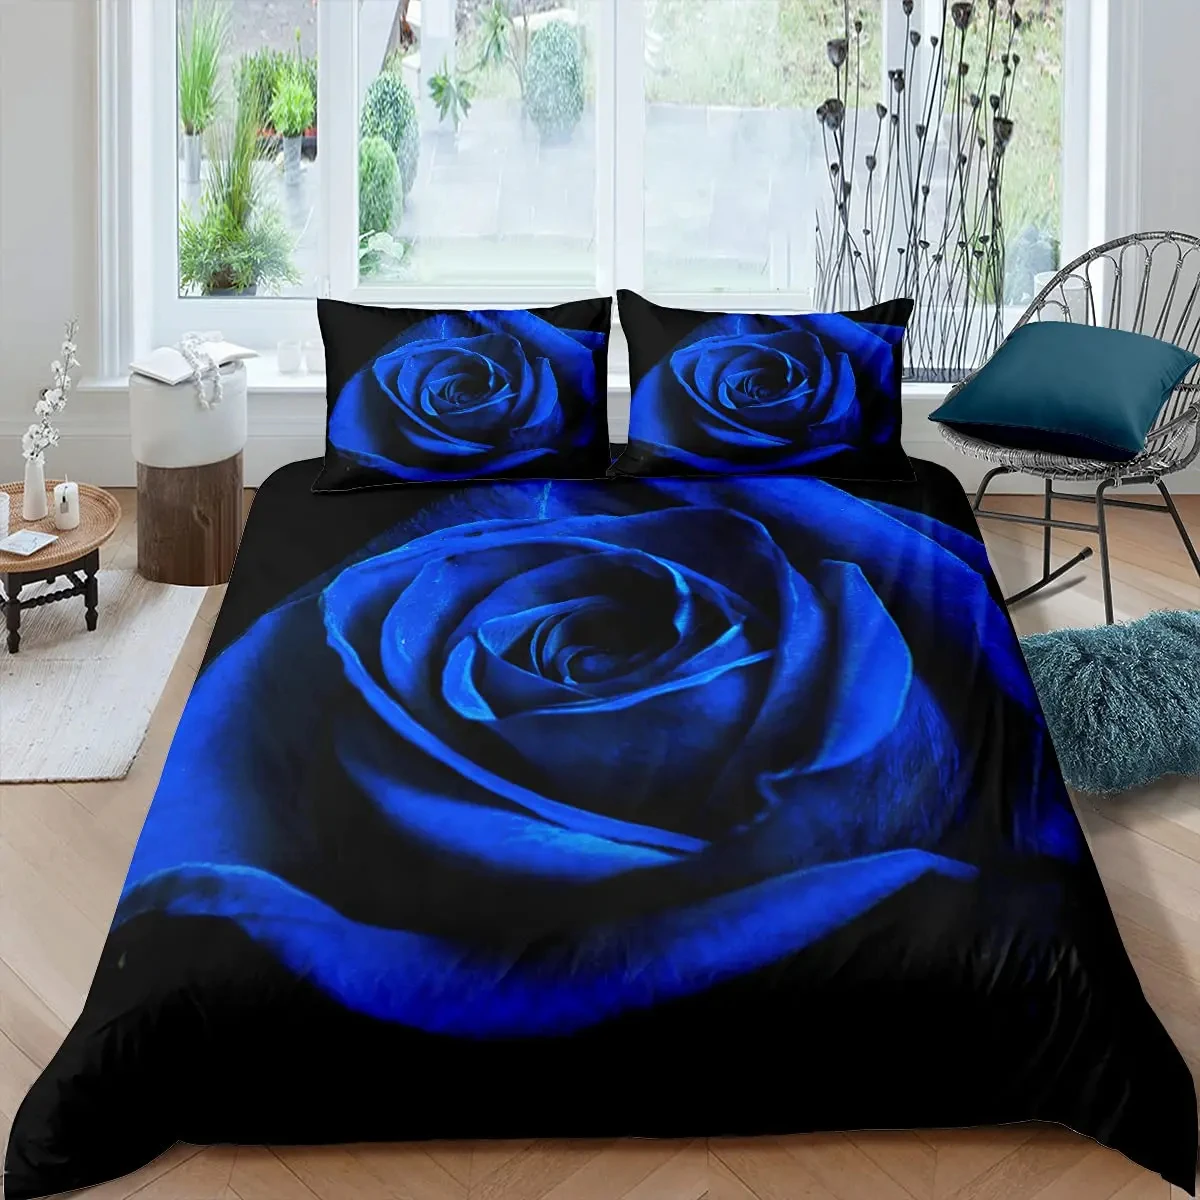 

Blue Rose Duvet Cover Set King Size 3D Printed Blossom Flowers Bedding Set Valentine's Day Botanical Polyester Comforter Cover